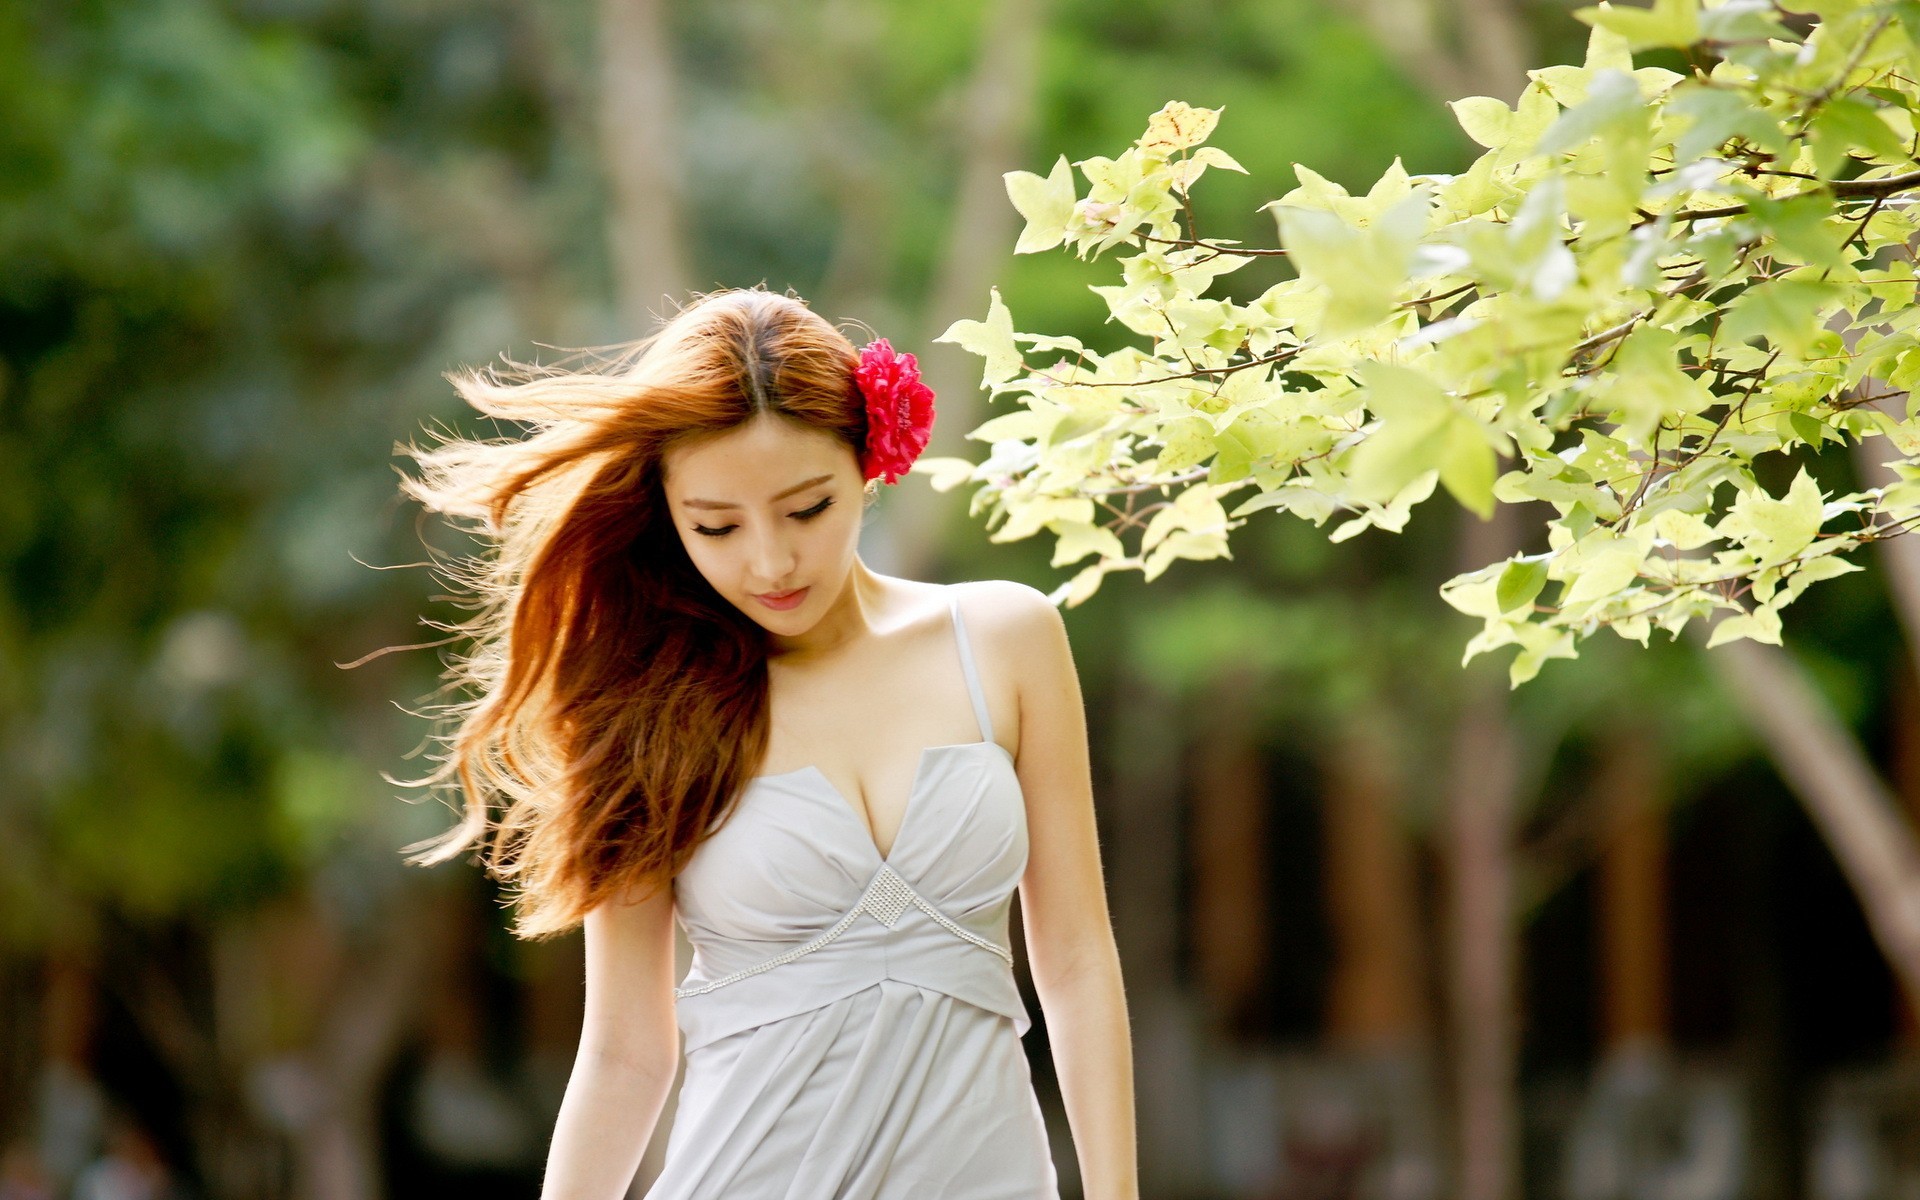 People 1920x1200 Asian women flower in hair redhead cleavage white dress women outdoors model plants twigs looking away dress